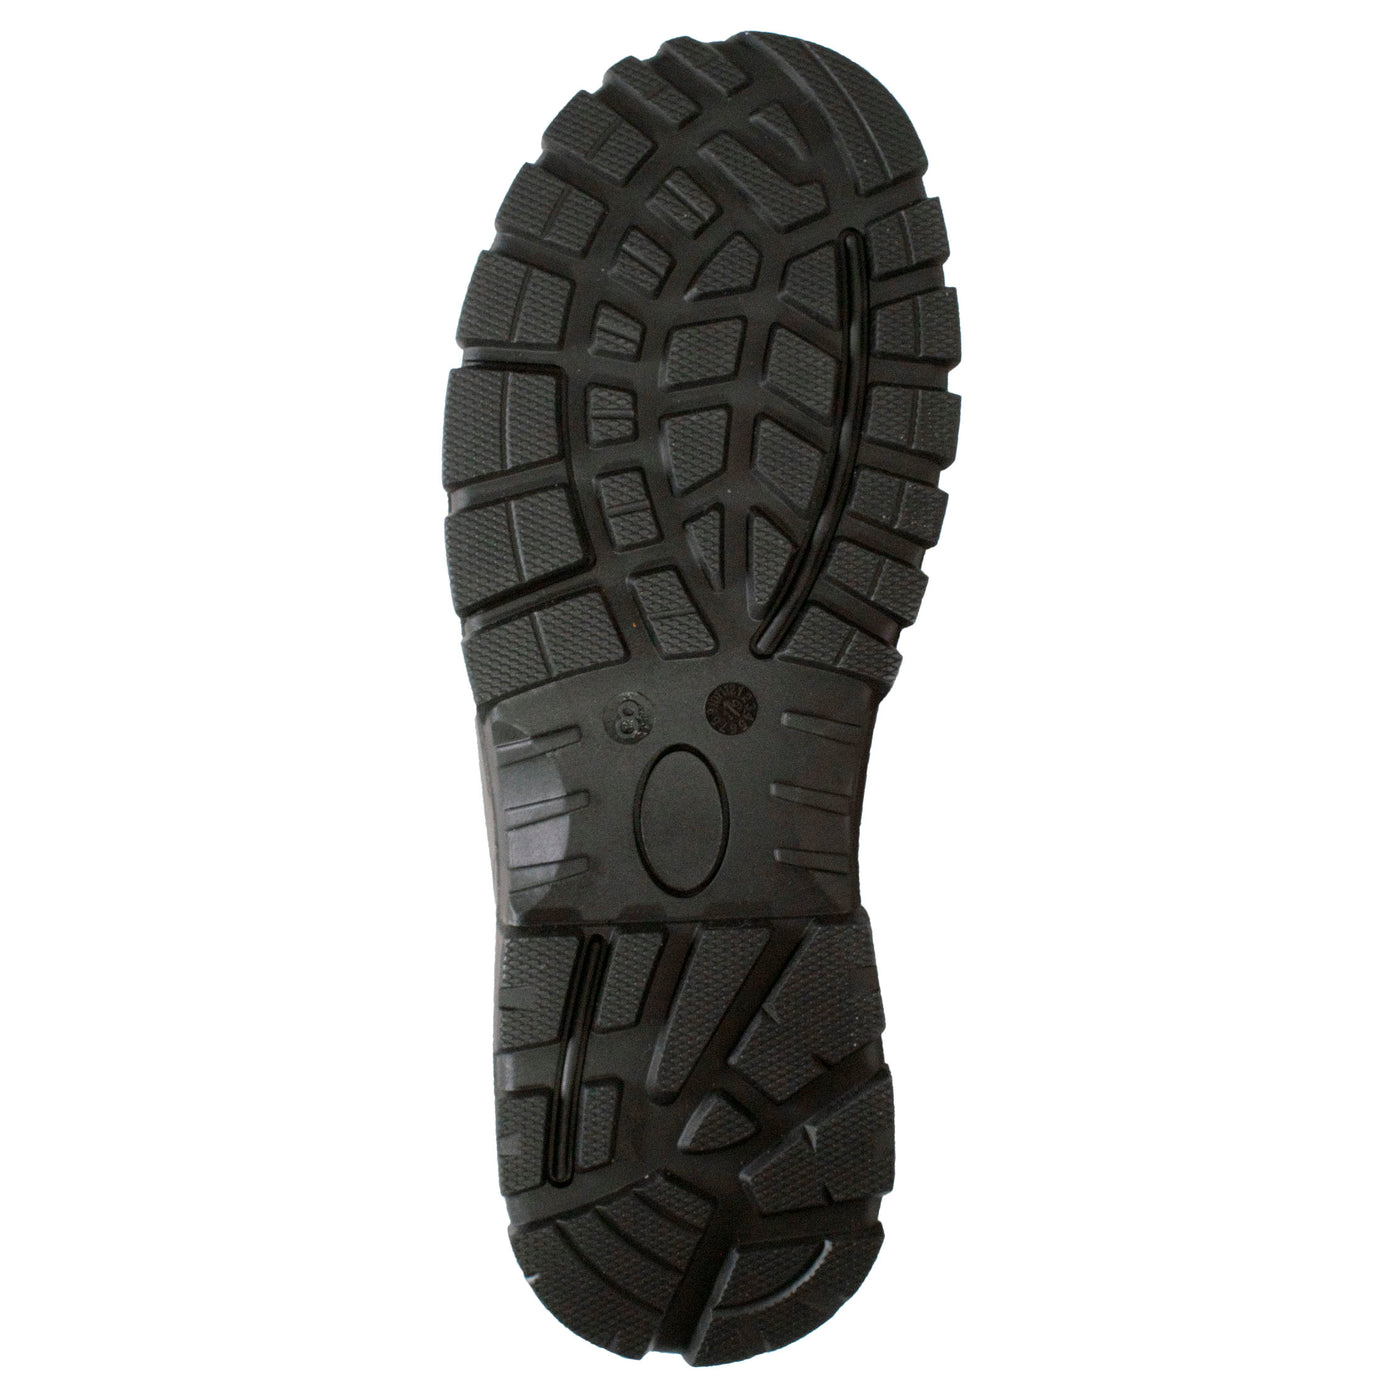 Men 6" Black Waterproof Composite Toe Work Boot - 9900-BK - Shop Genuine Leather men & women's boots online | AdTecFootWear